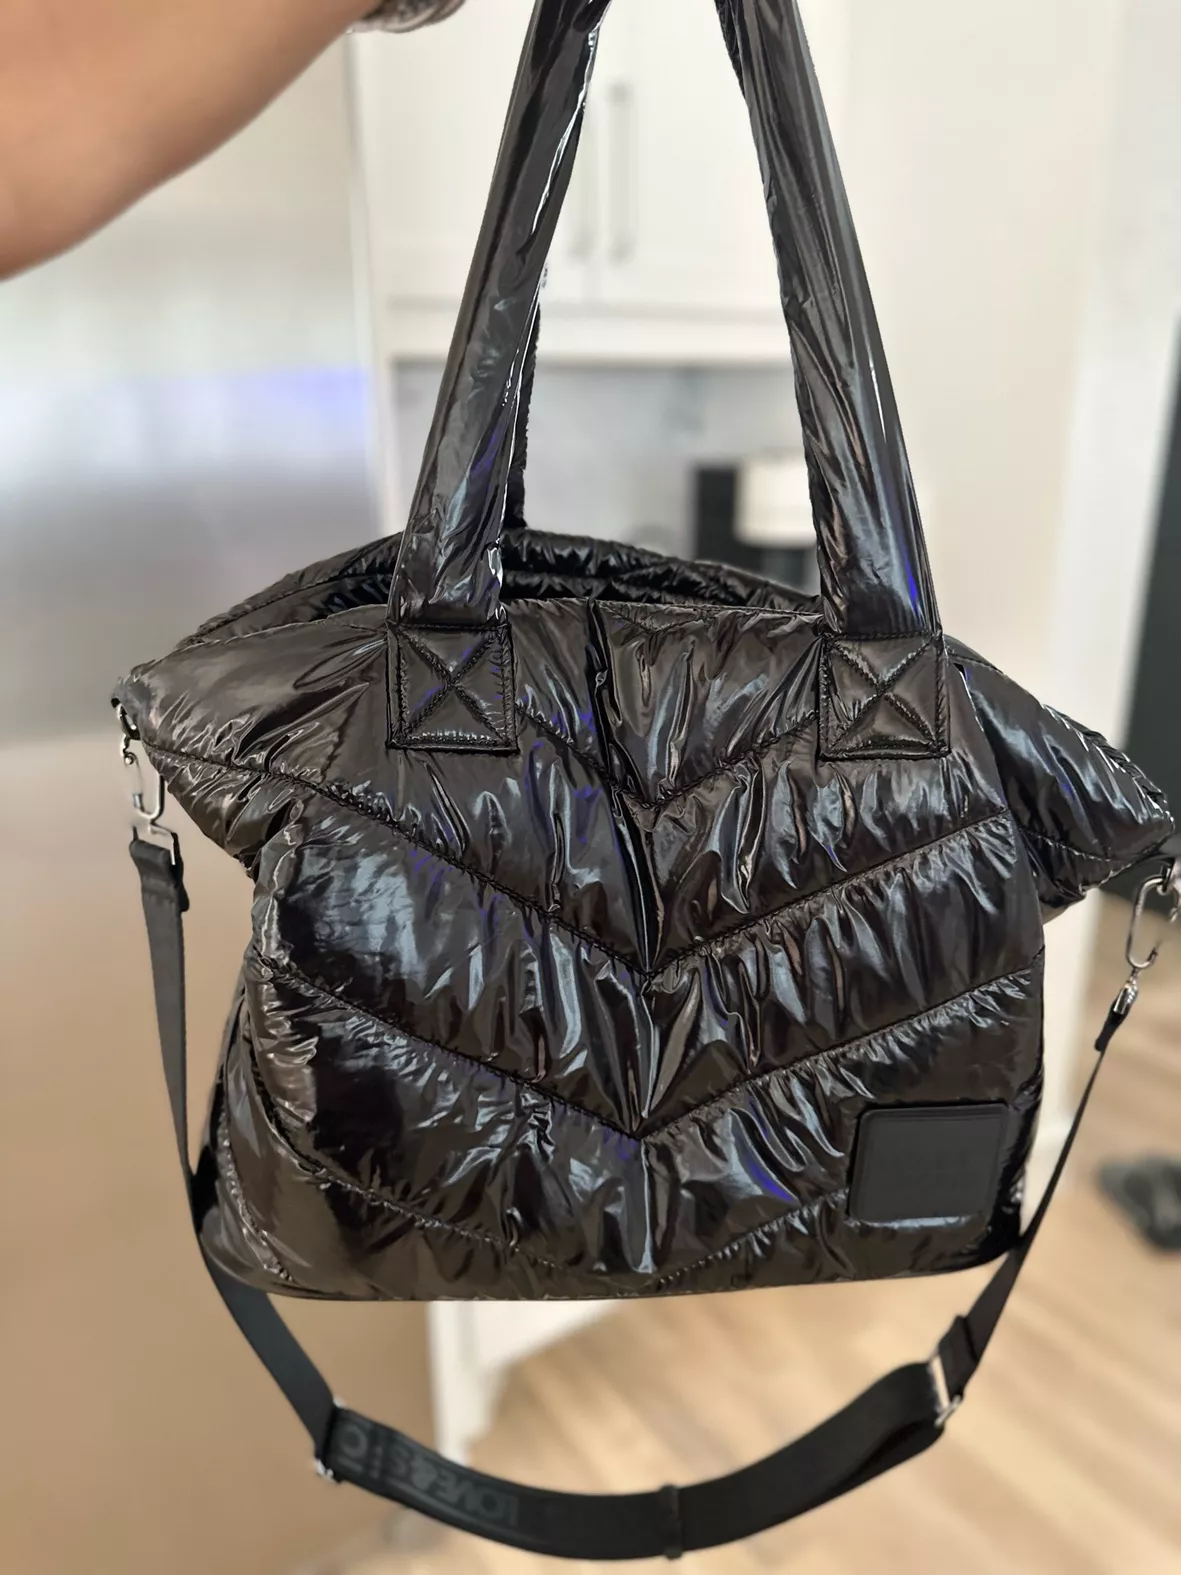 Love & Sports Women's Olivia Large Tote Bag, Black